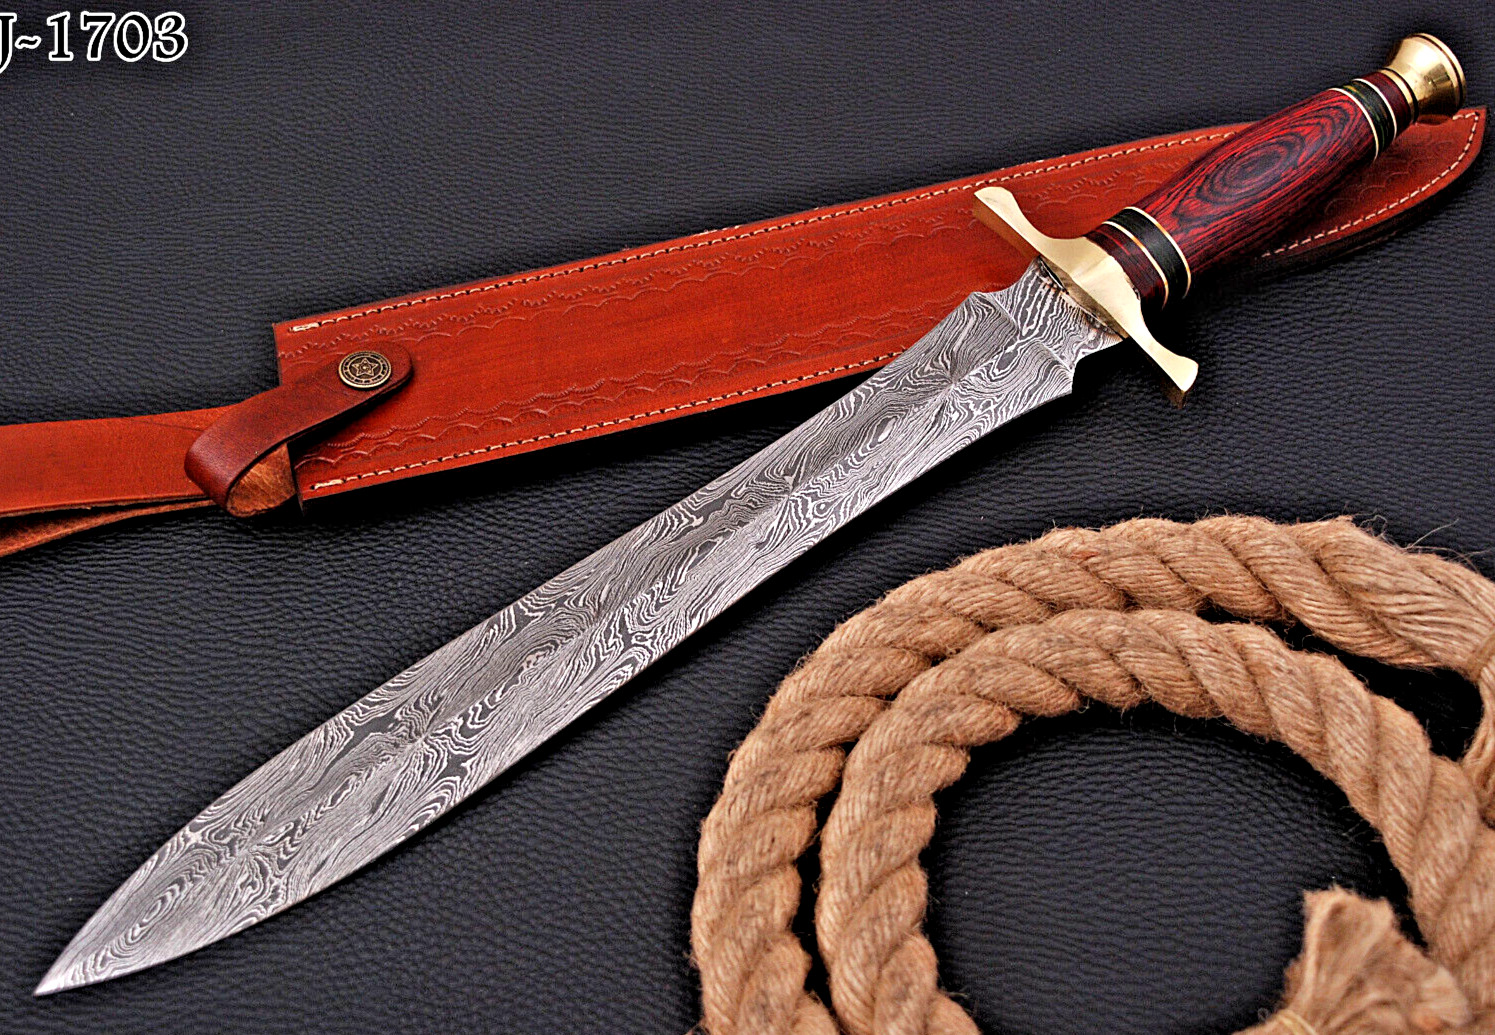 Macedonian Army Damascus Sword Custom Made - Hand Forged Damascus Steel 1703